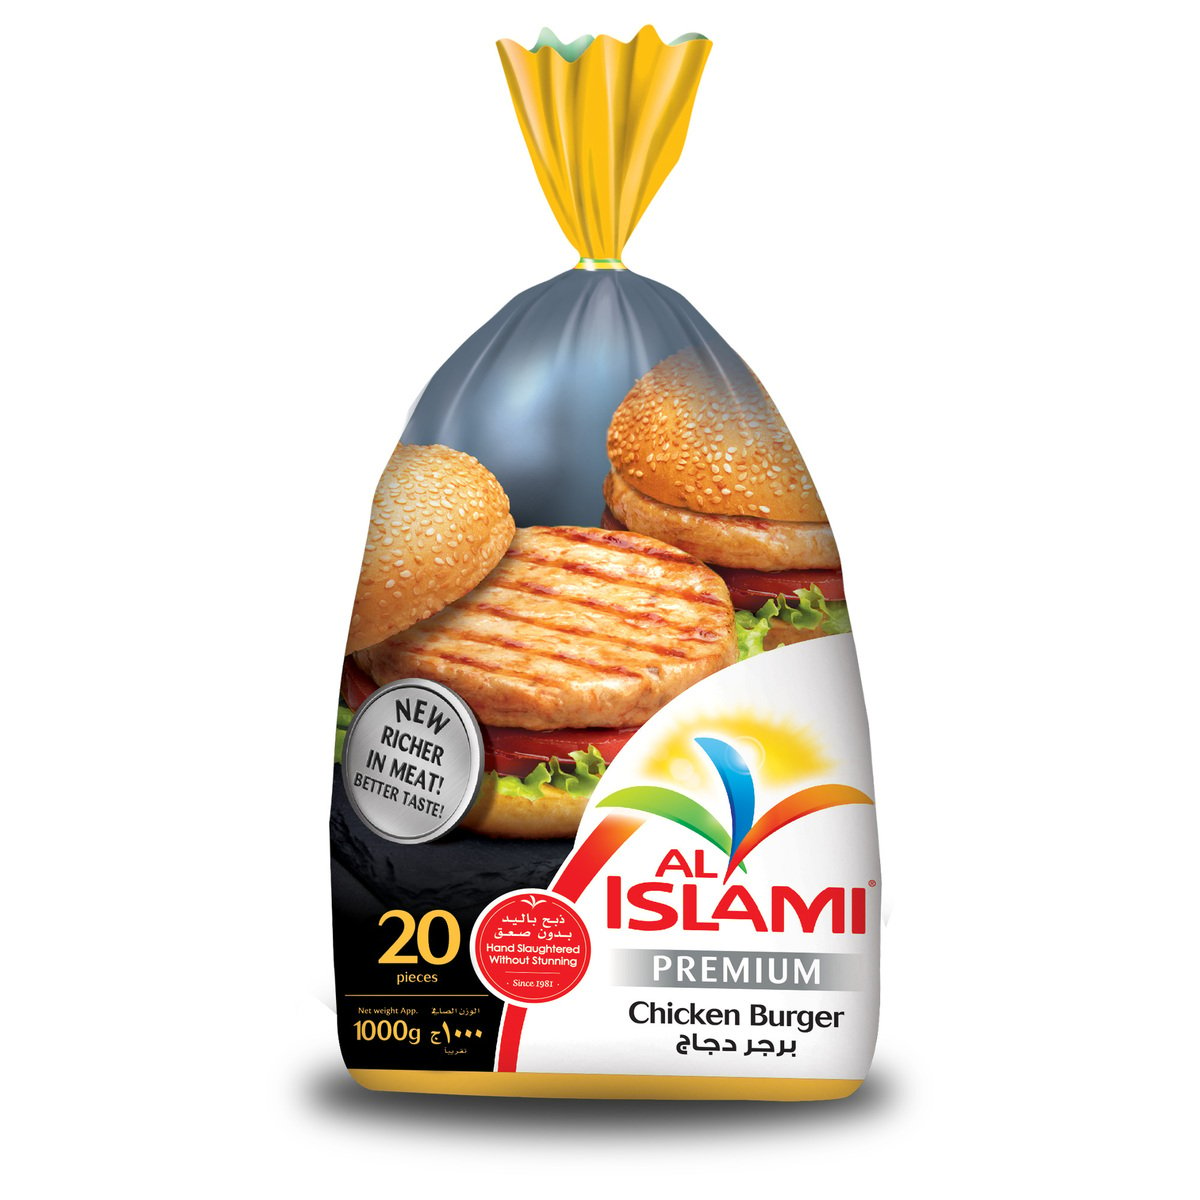 Al Islami Premium Chicken Burger Value Pack 1 kg